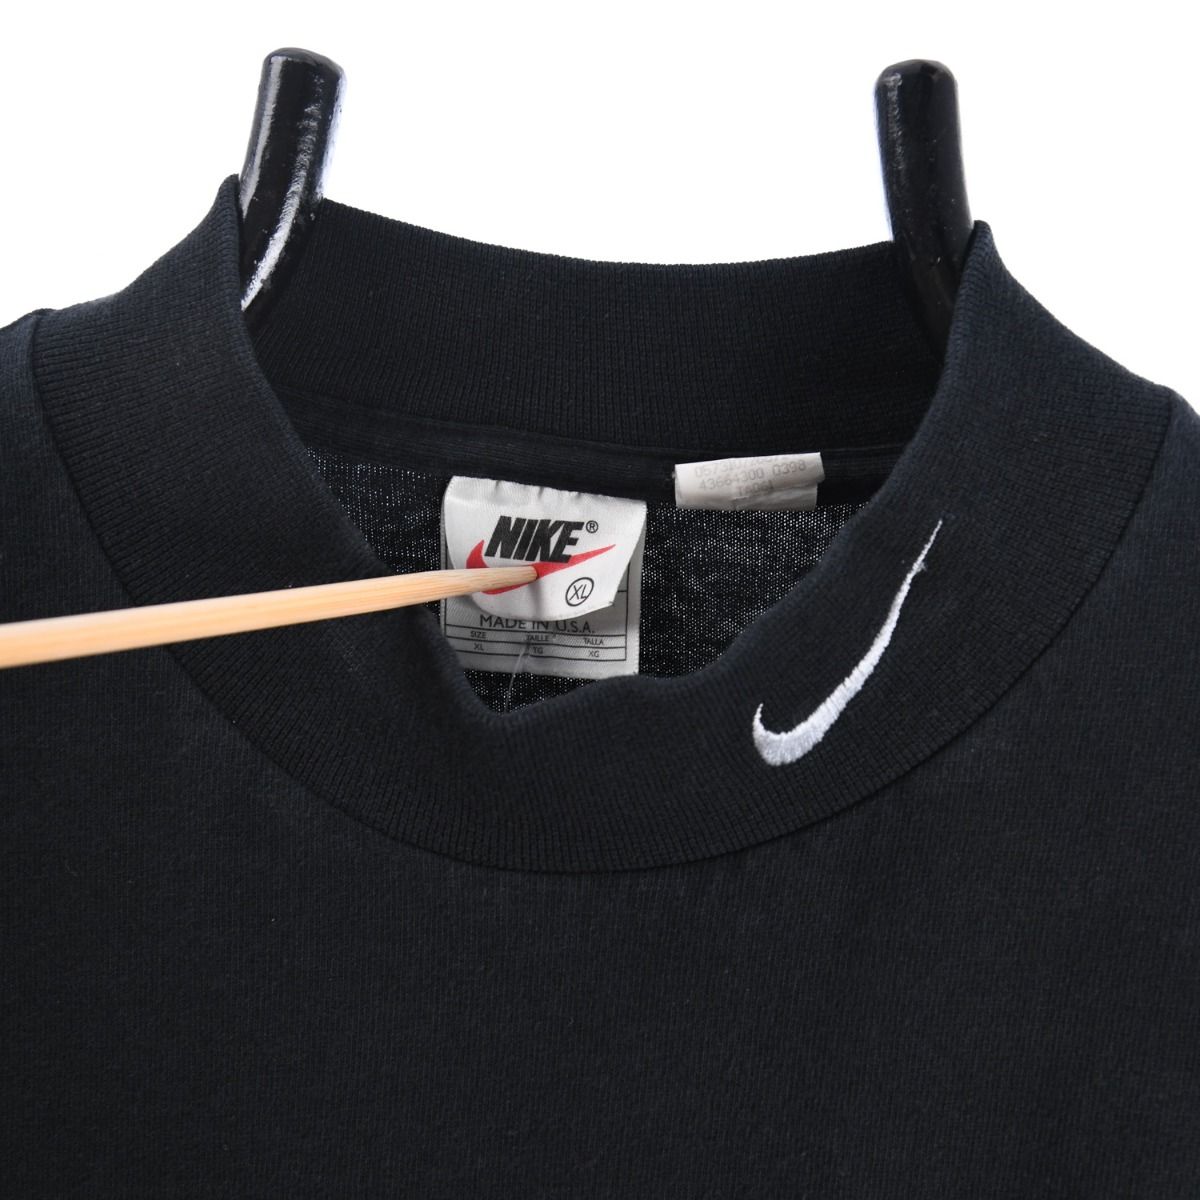 Nike 1990s High Collar Long Sleeve Top